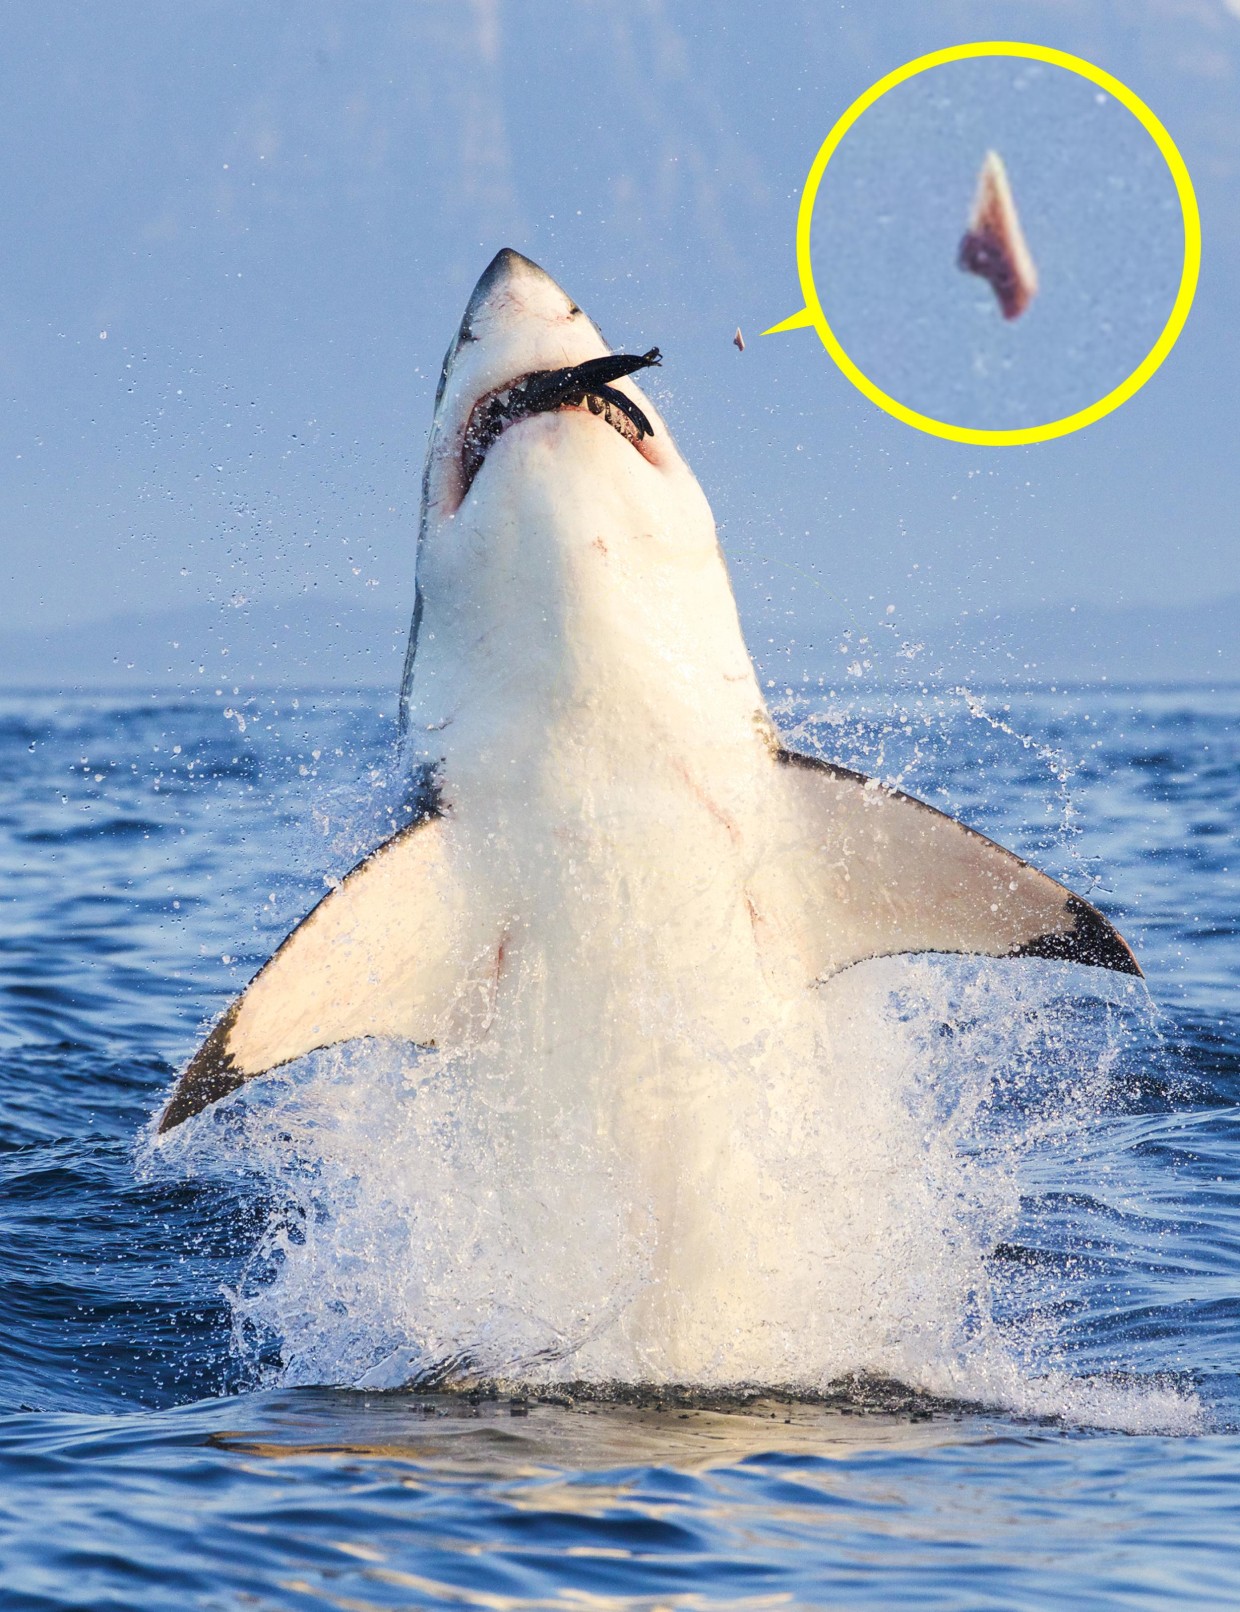 https://media-cldnry.s-nbcnews.com/image/upload/t_fit-1240w,f_auto,q_auto:best/newscms/2014_07/175996/140210-shark-loses-tooth-jsw-1111a.jpg